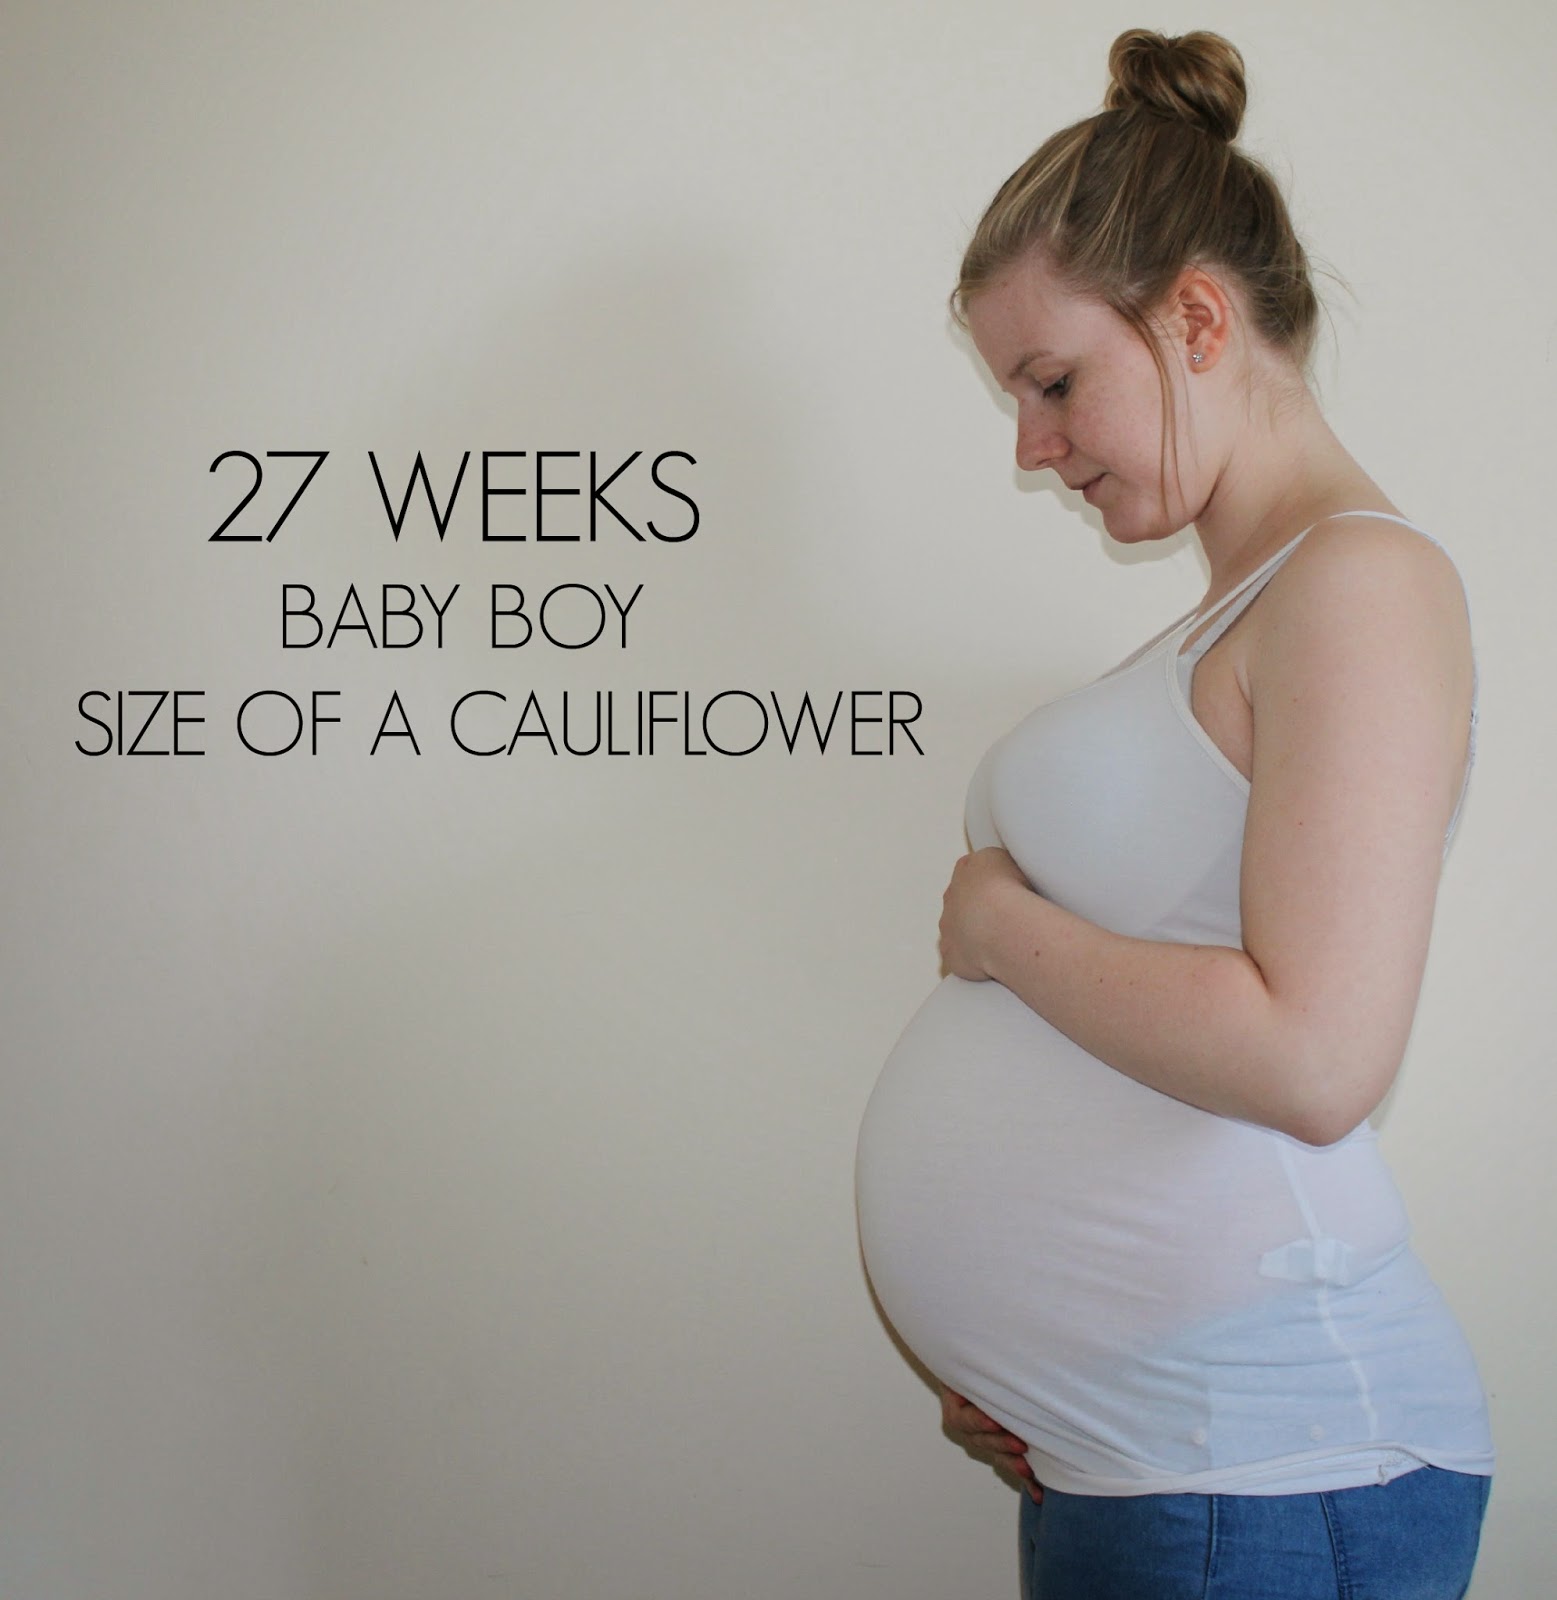 27 Weeks Pregnant Baby Brain Development